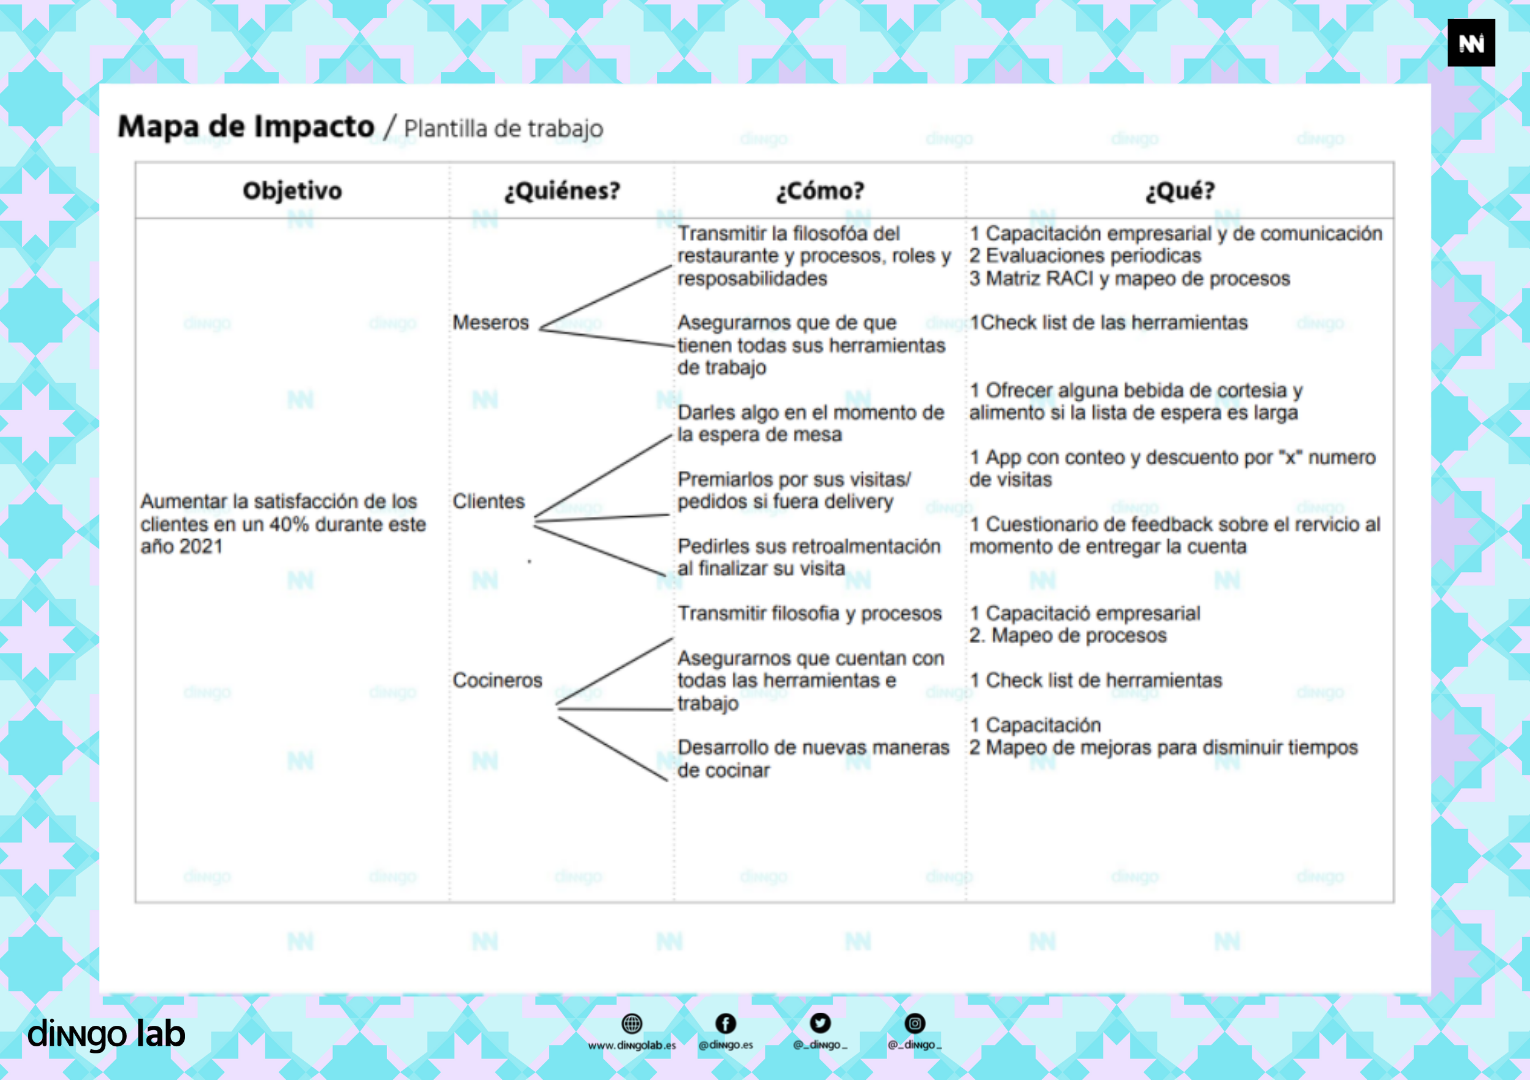 pildora-tecnica-dinngo-lab-design-thinking-mapa-impacto